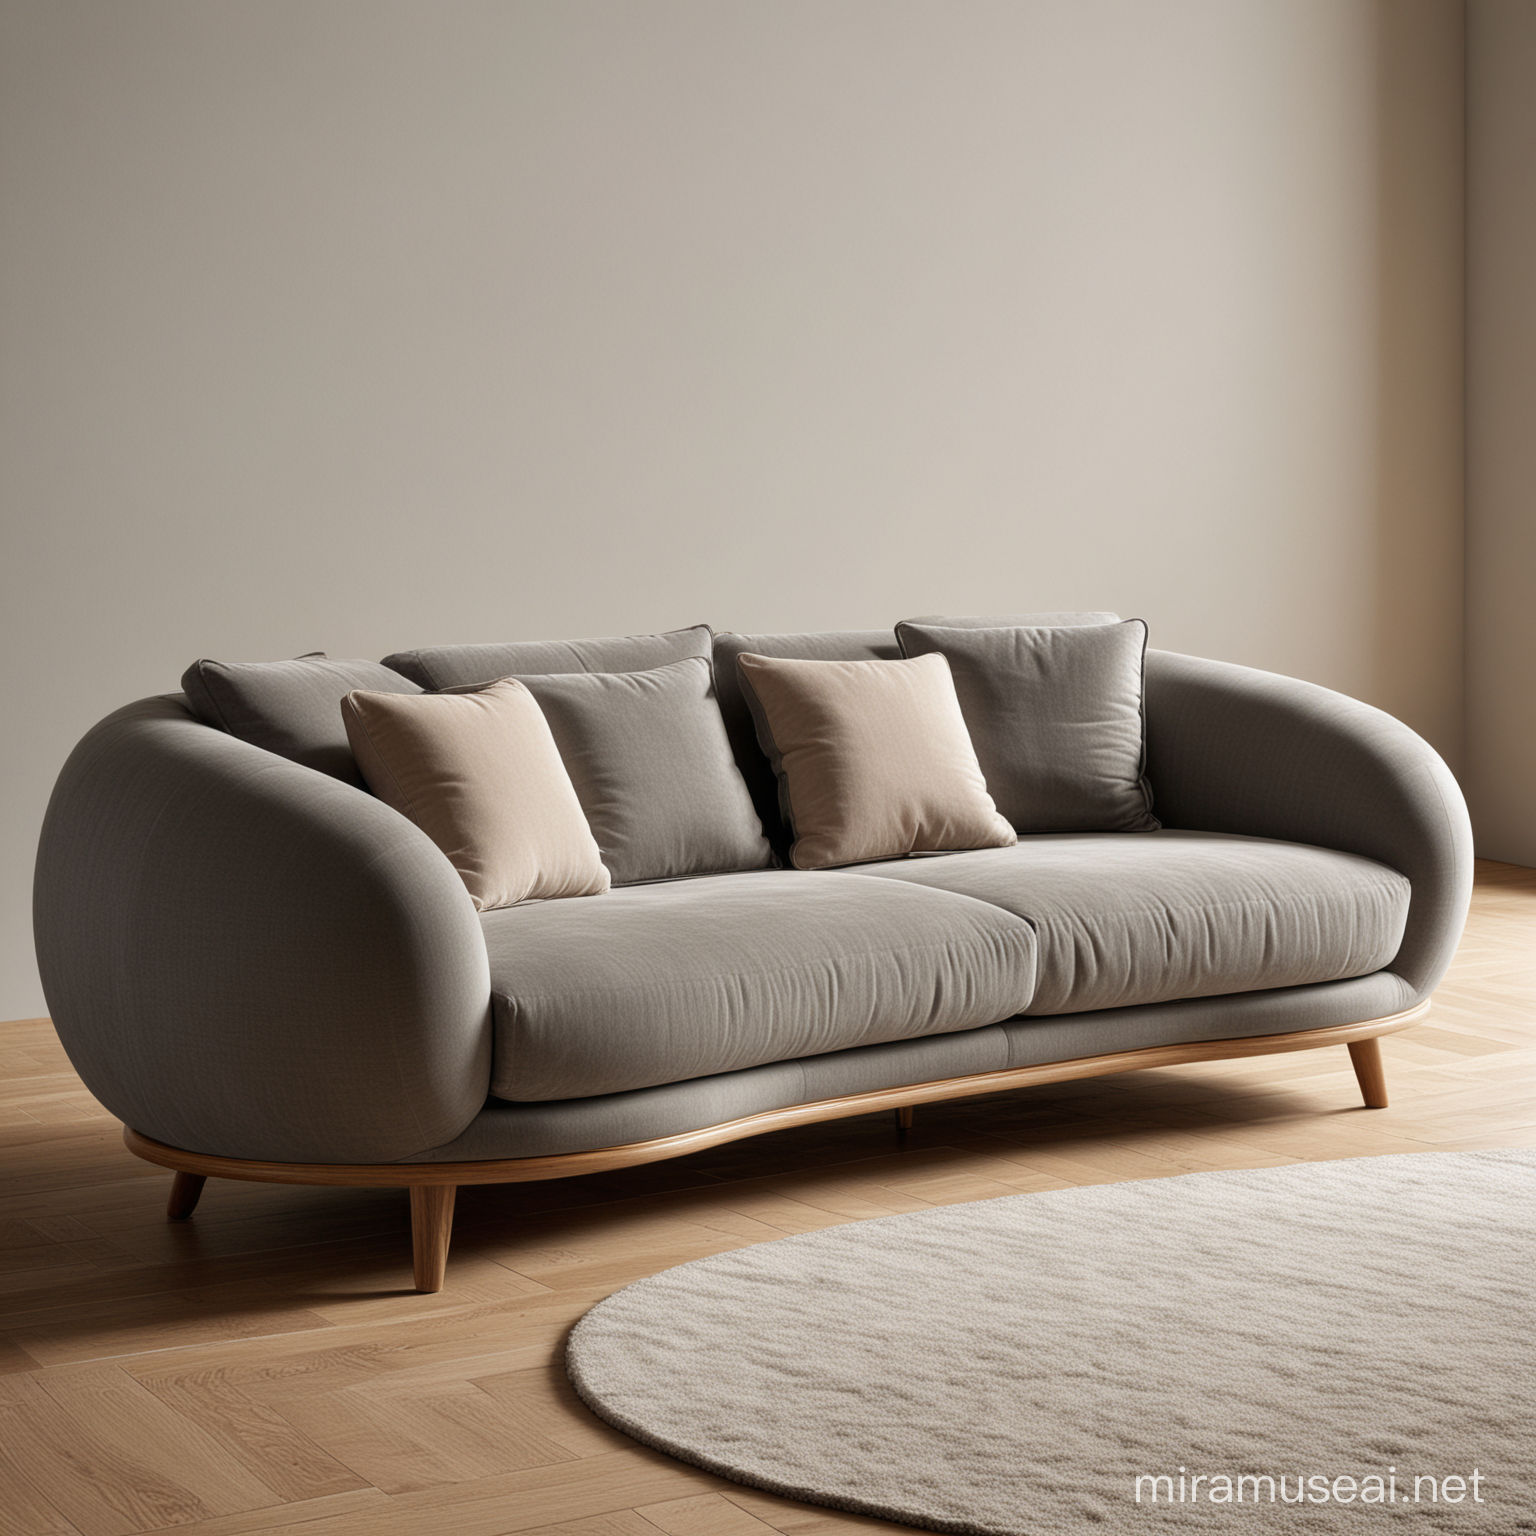 Italian Style Modern Oval Sofa with Creative Design Elements